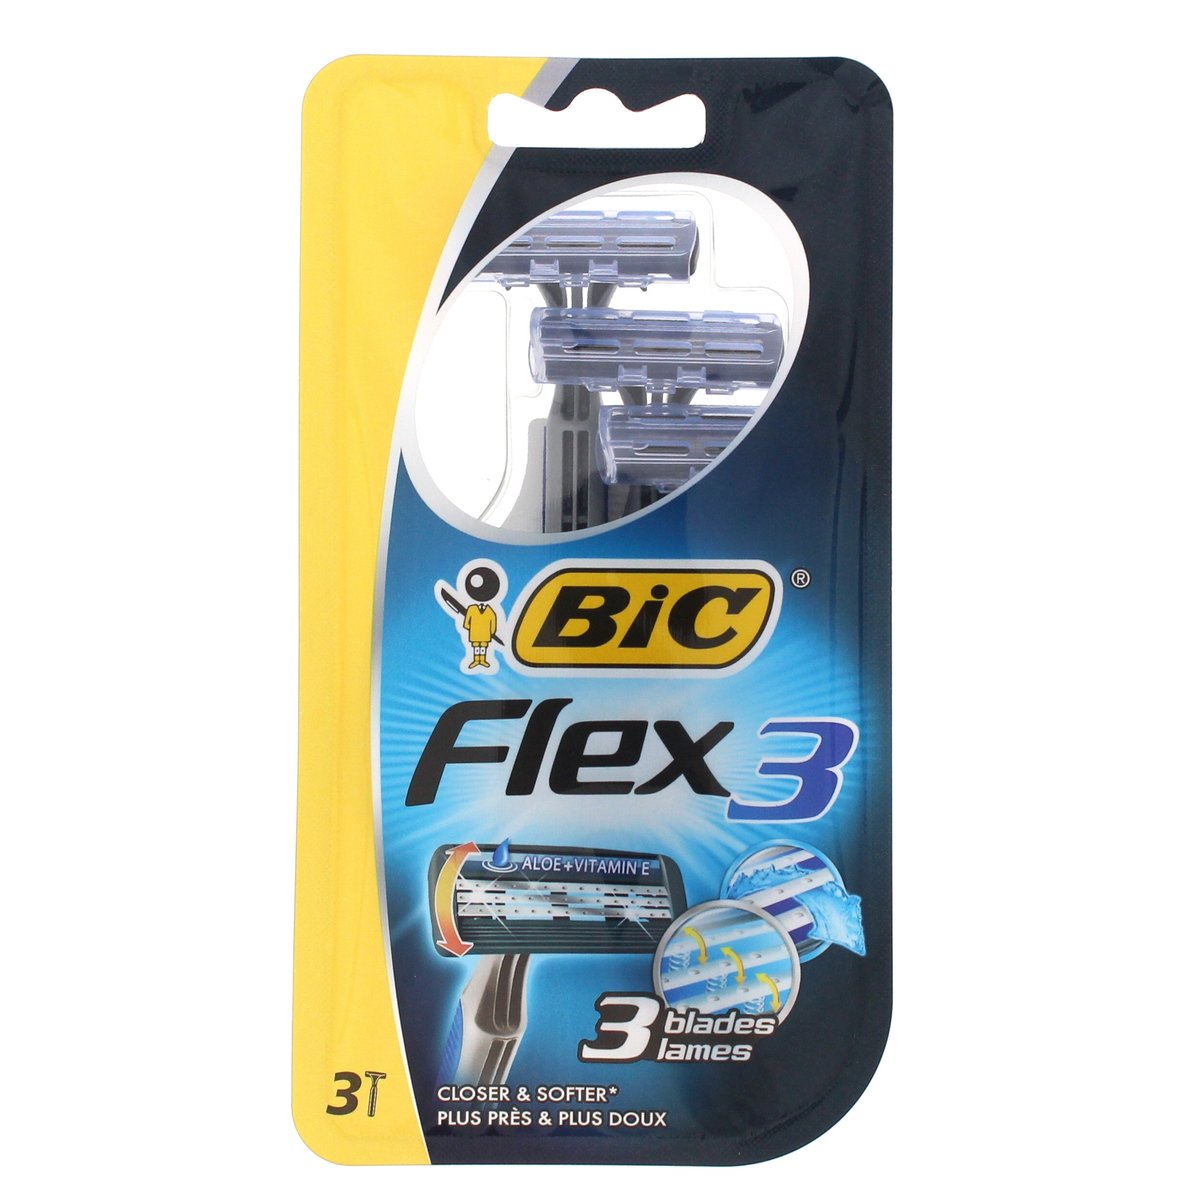 Bic Flex3 Disposable Razor for Men 3 pcs